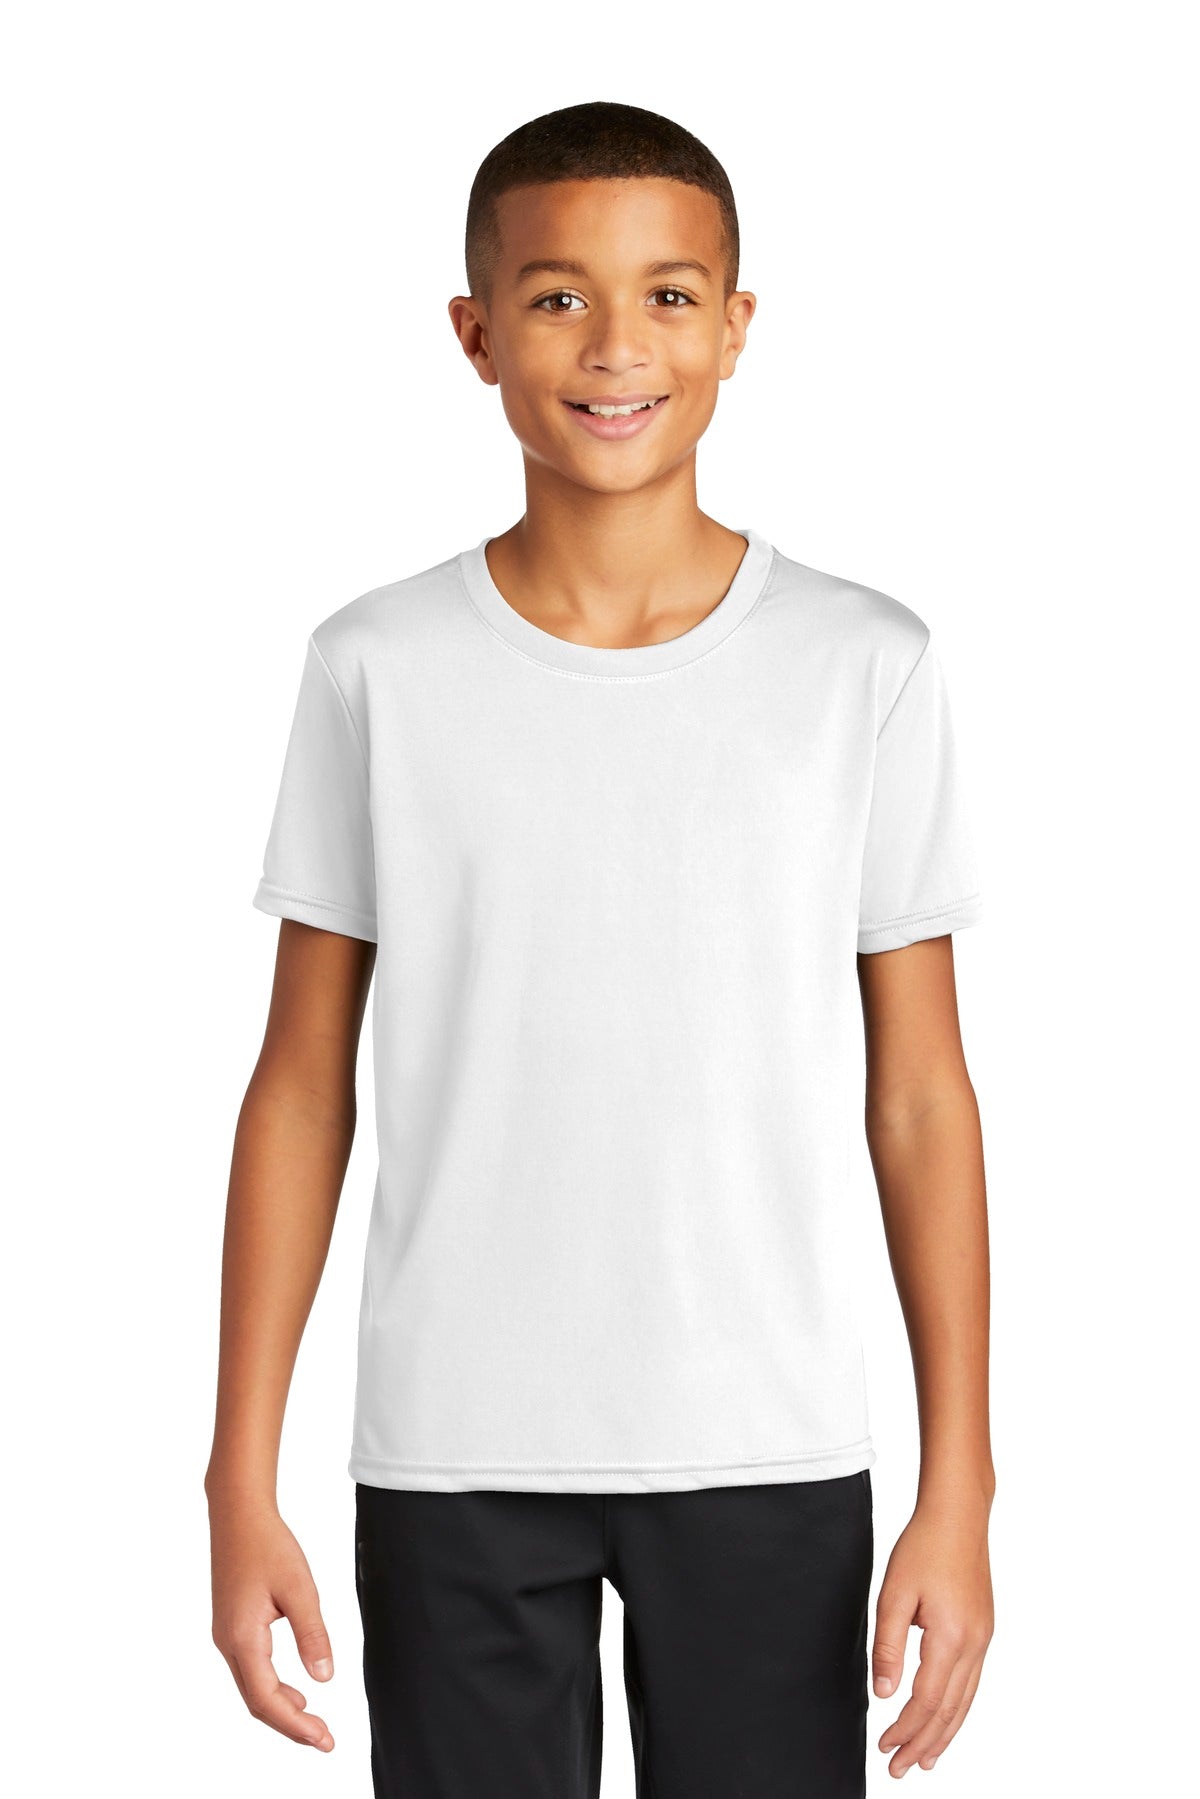 Gildan Performance ® Youth Core T-Shirt. 46000B - DFW Impression